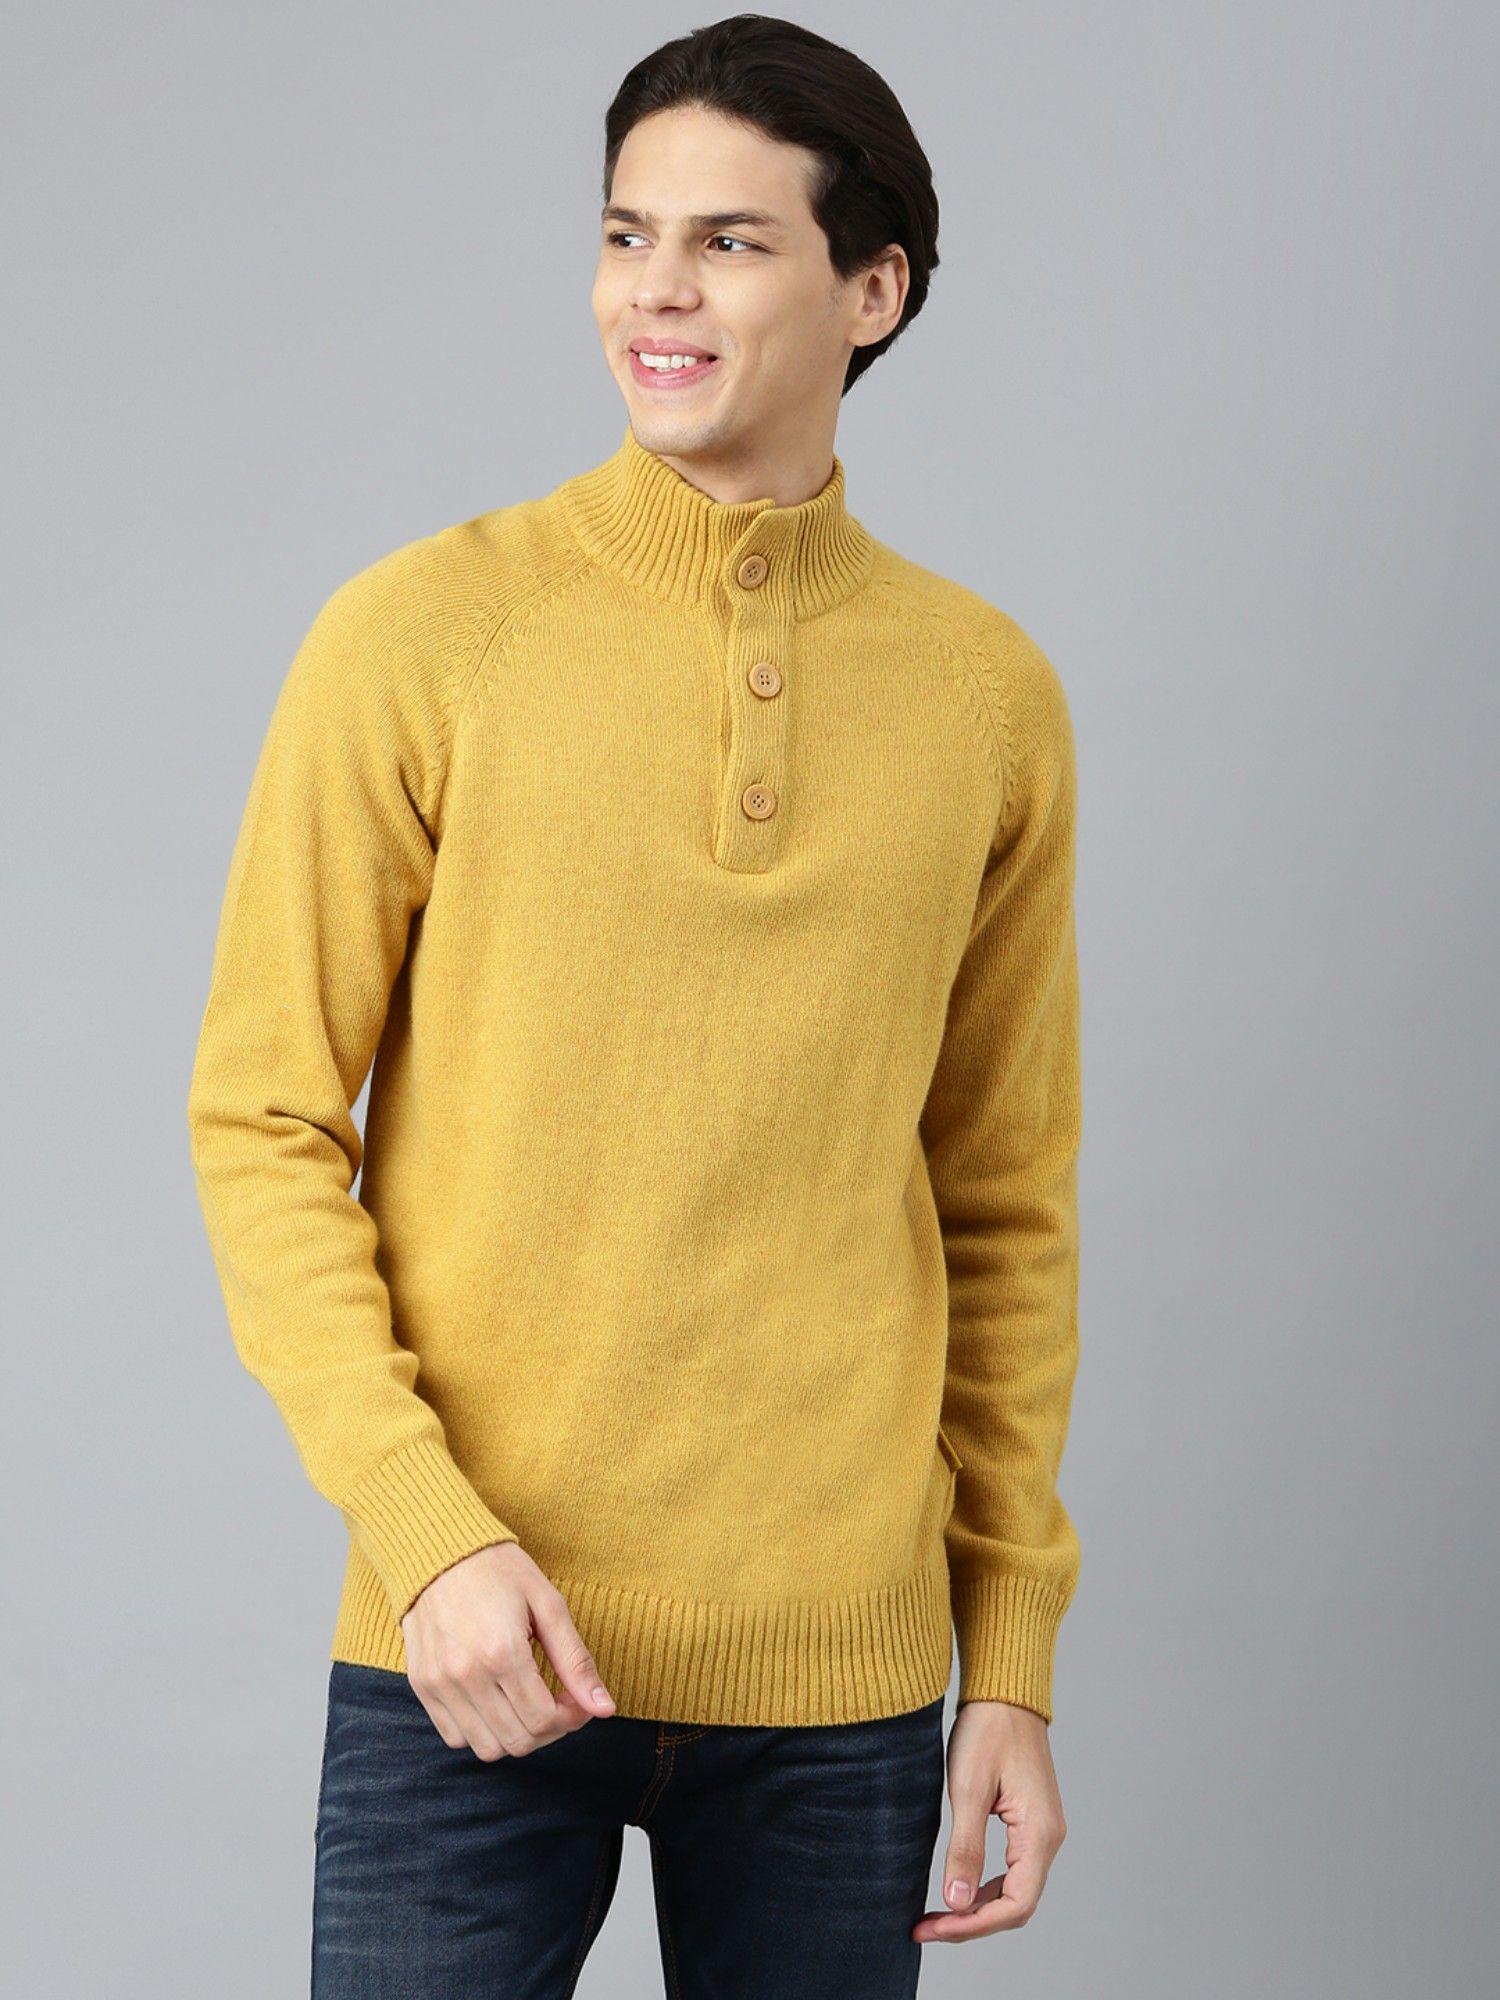 woven-sweater-yellow